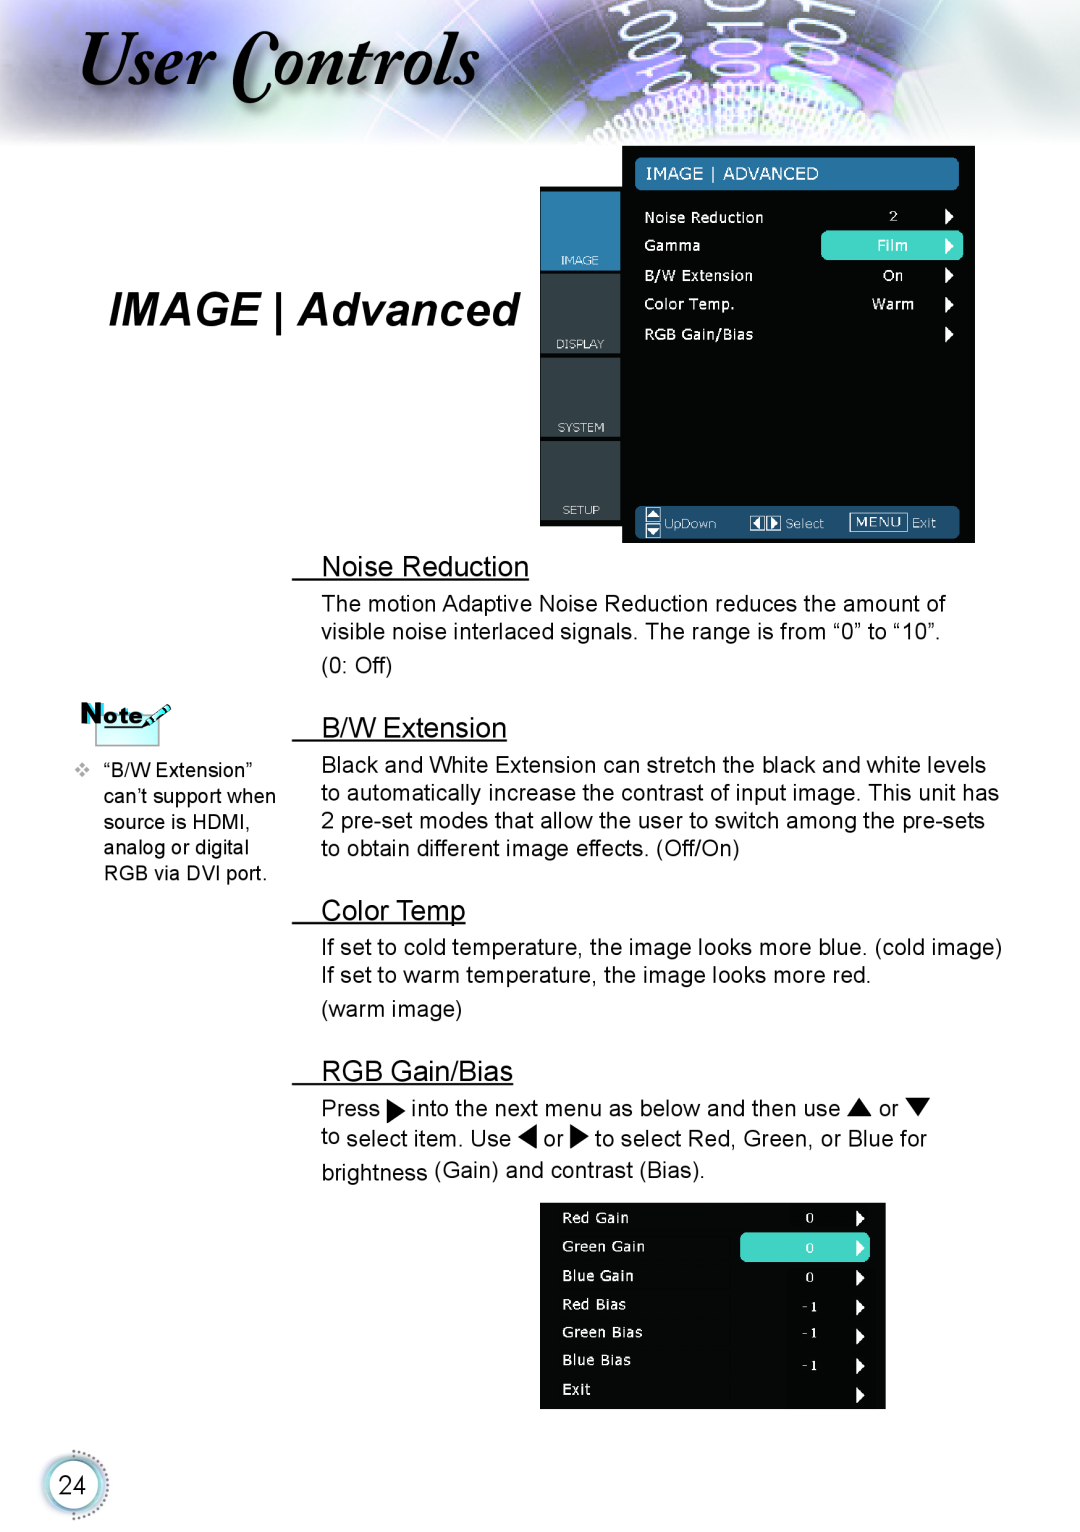 Optoma Technology HD20 manual IMAGE | Advanced, Noise Reduction, B/W Extension, Color Temp, RGB Gain/Bias, ser ontrols 